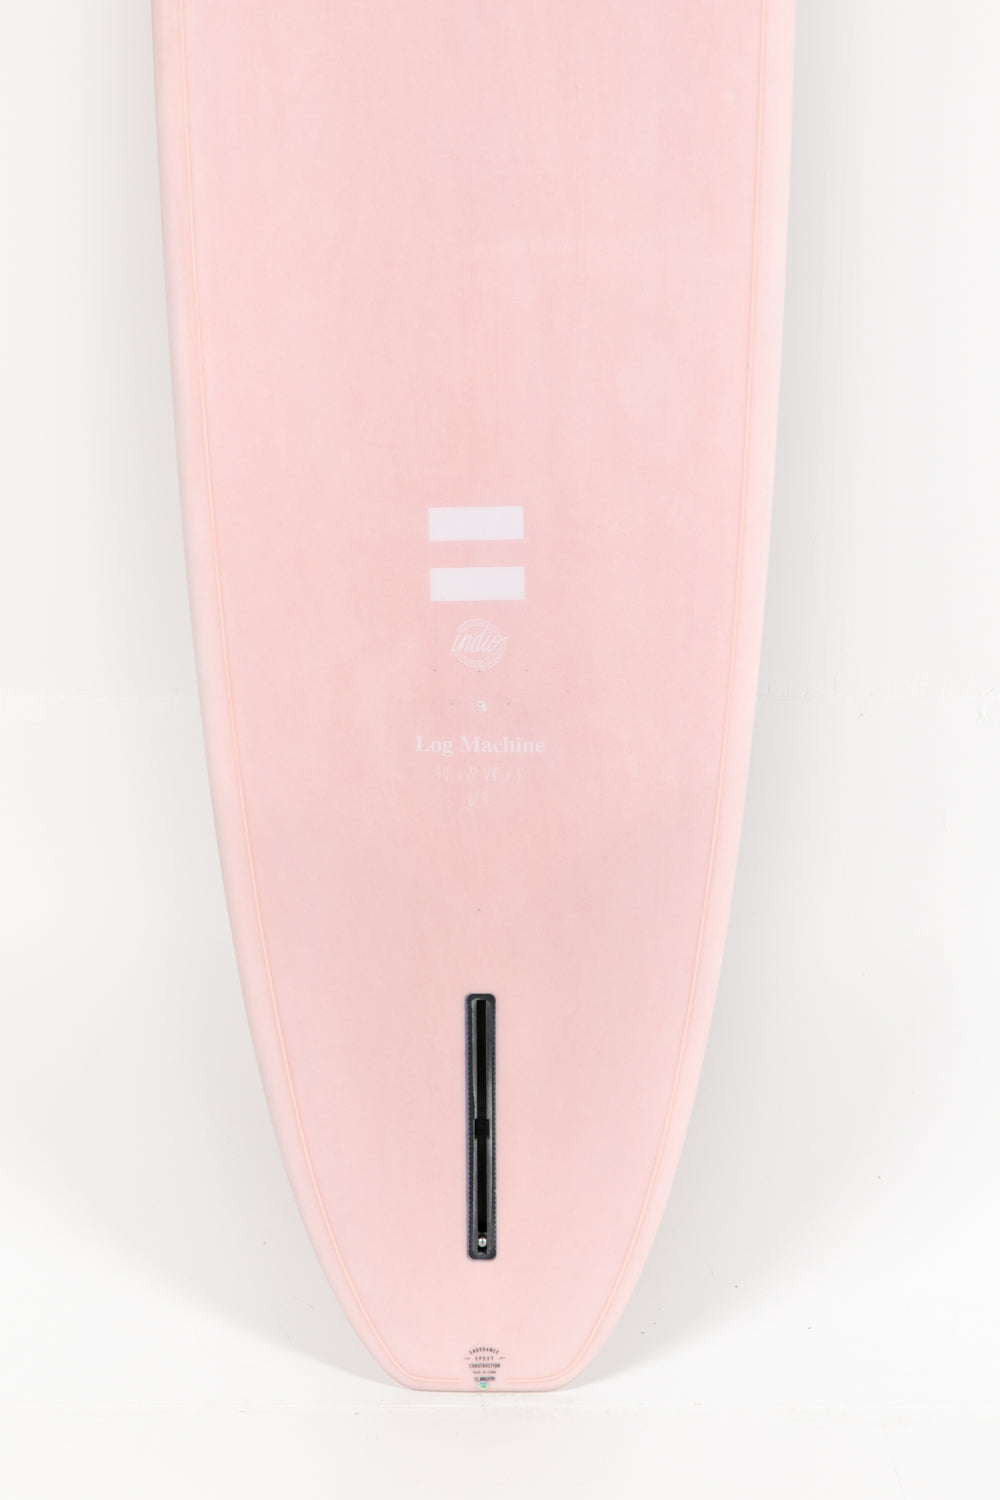 
                  
                    Pukas Surf Shop - Indio Surfboards - LOG MACHINE Pink - Endurance Epoxy 9´6 x 22 1/2 x 3 - 72,4L
                  
                